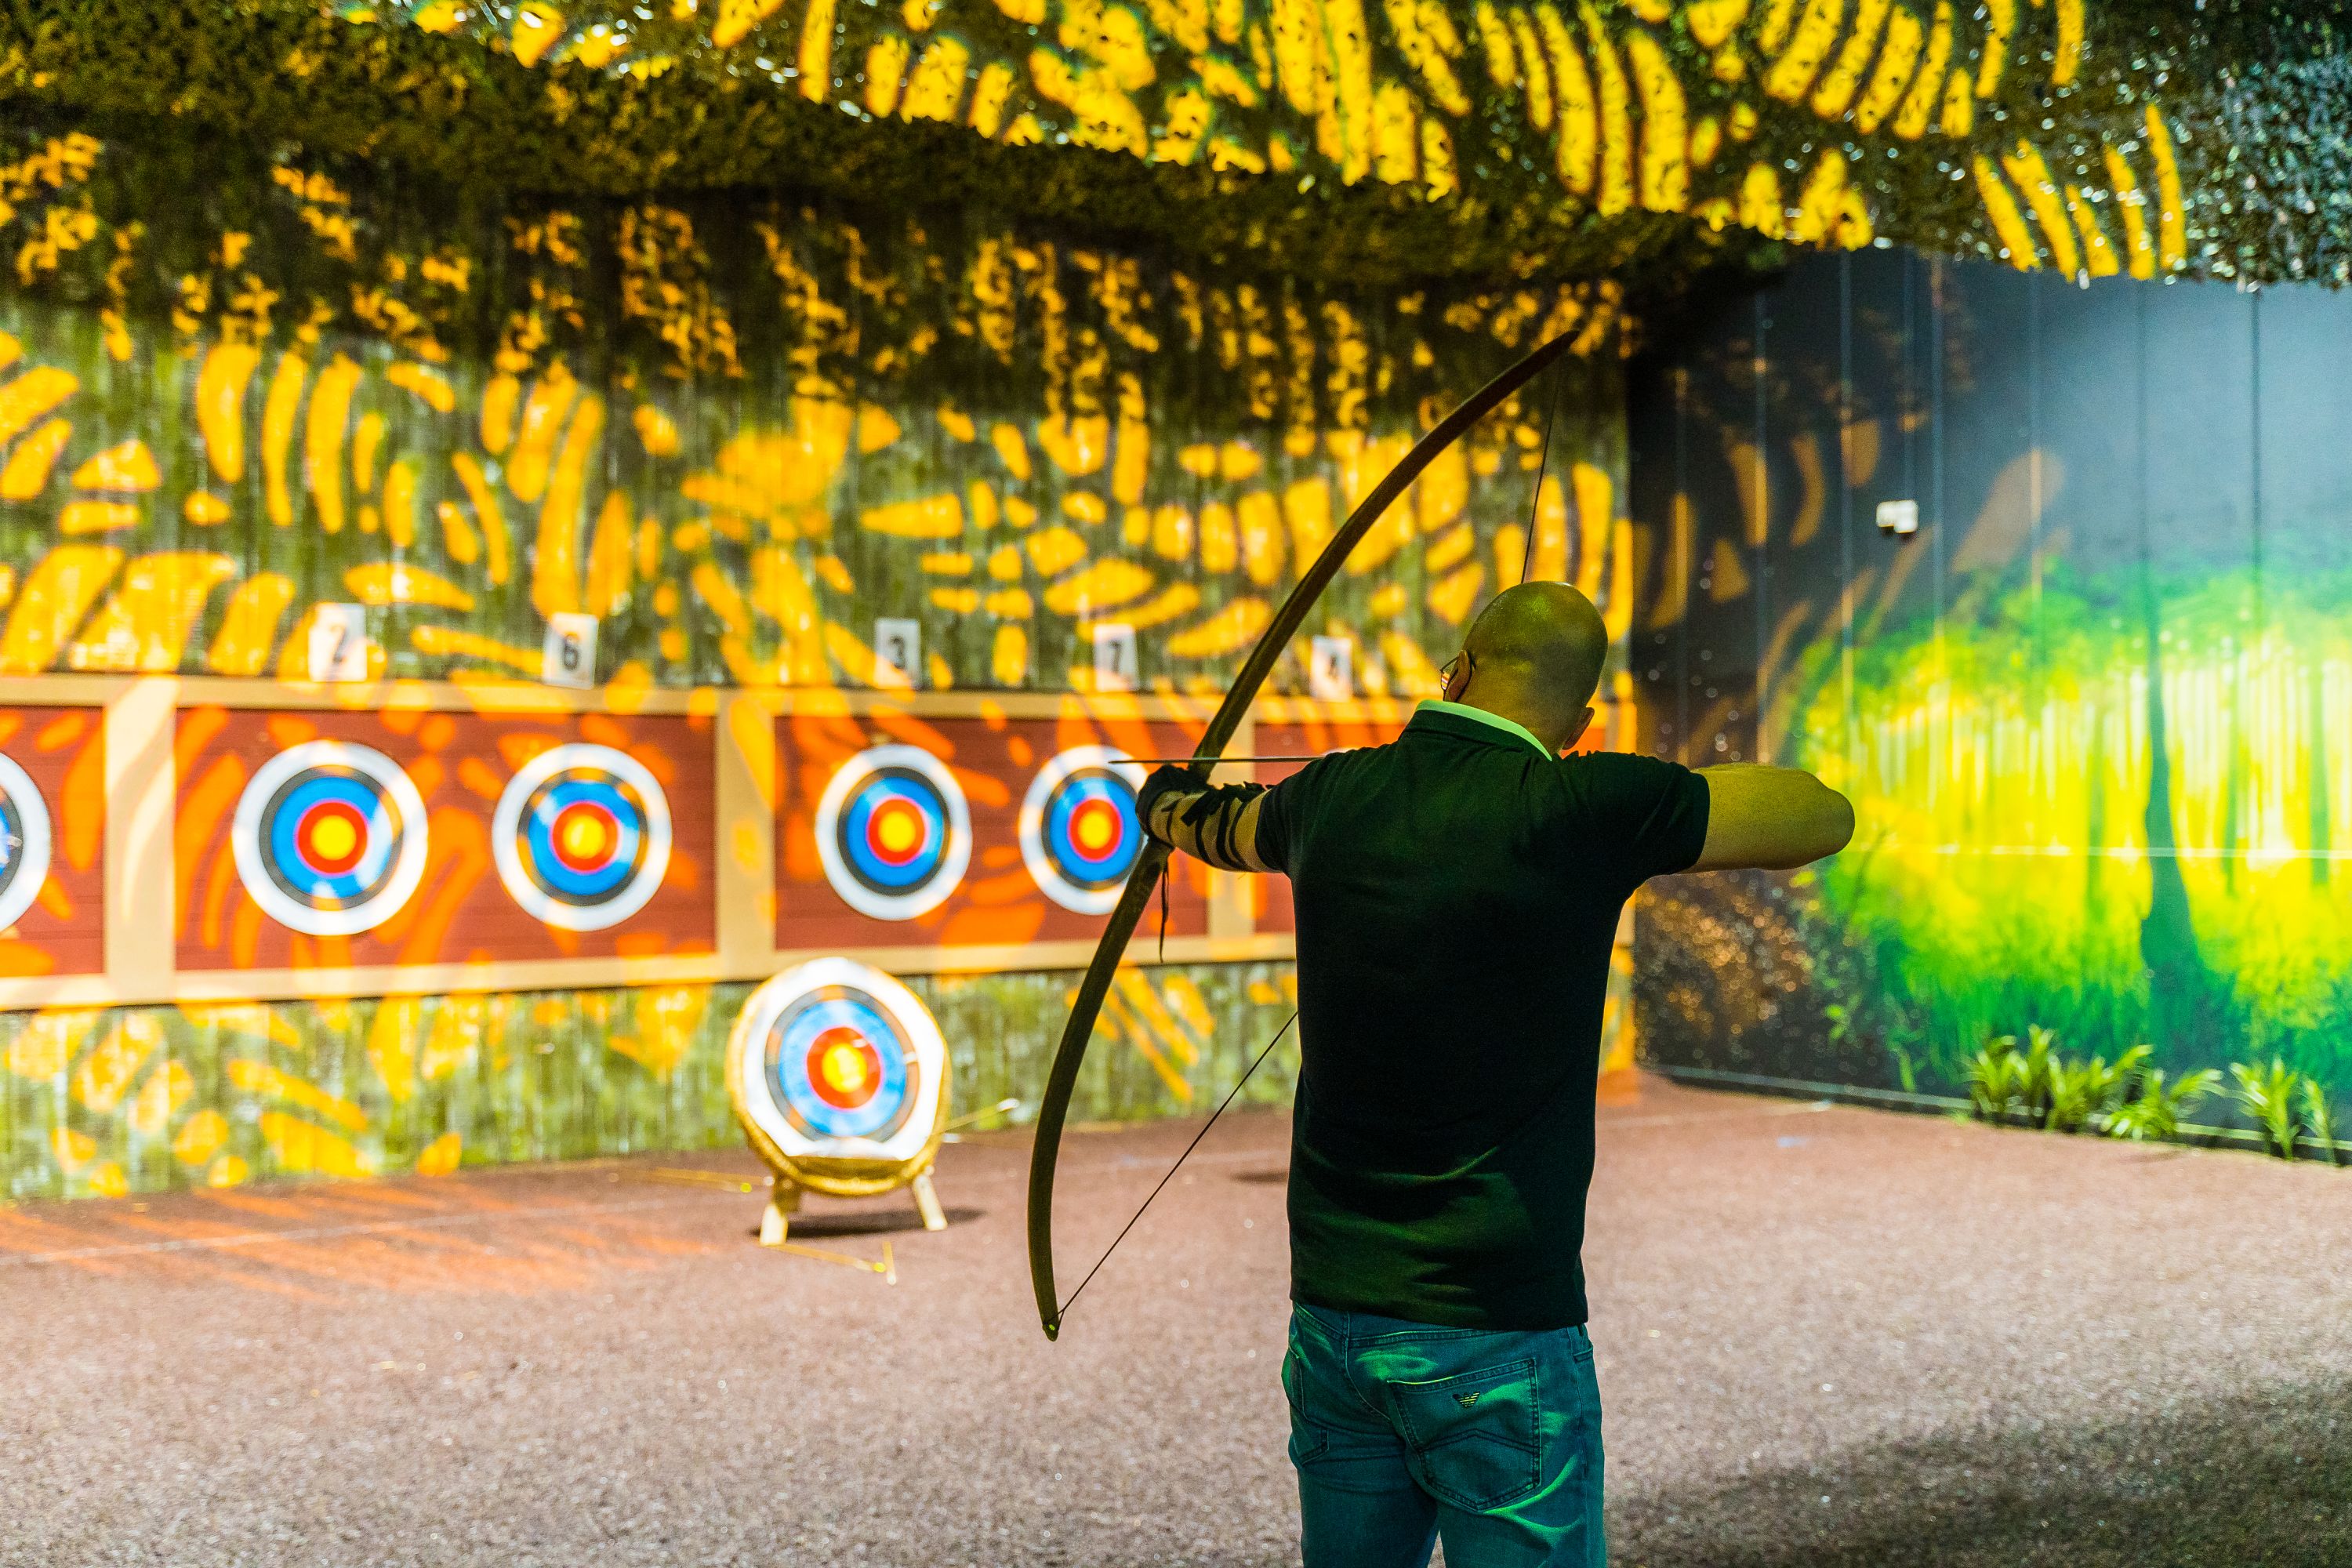 Man takes aim at target on archery range at The Bear Grylls Adventure